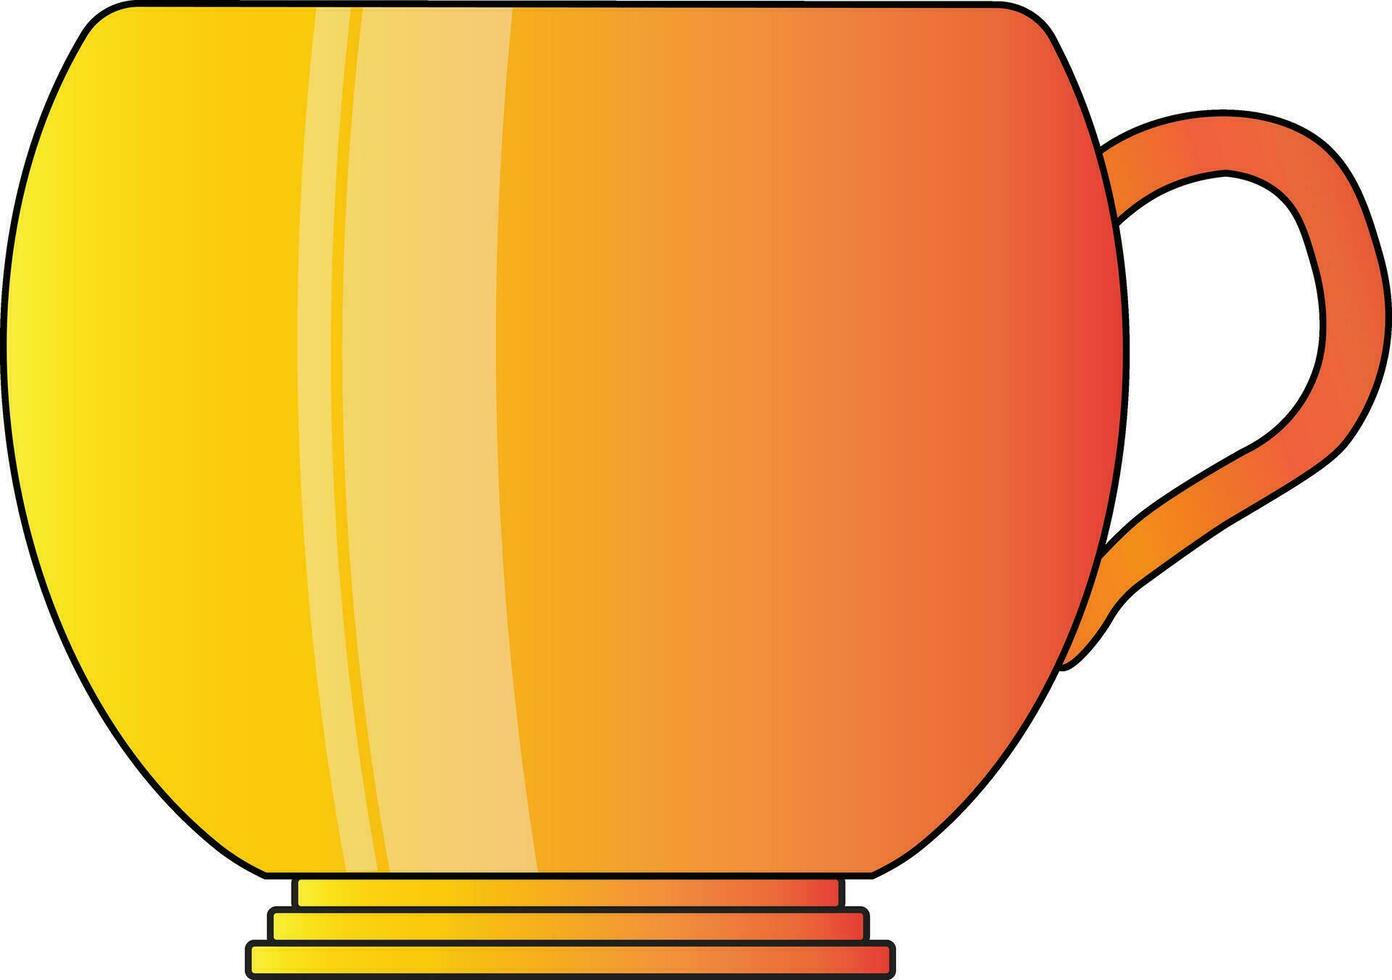 An orange cup vector